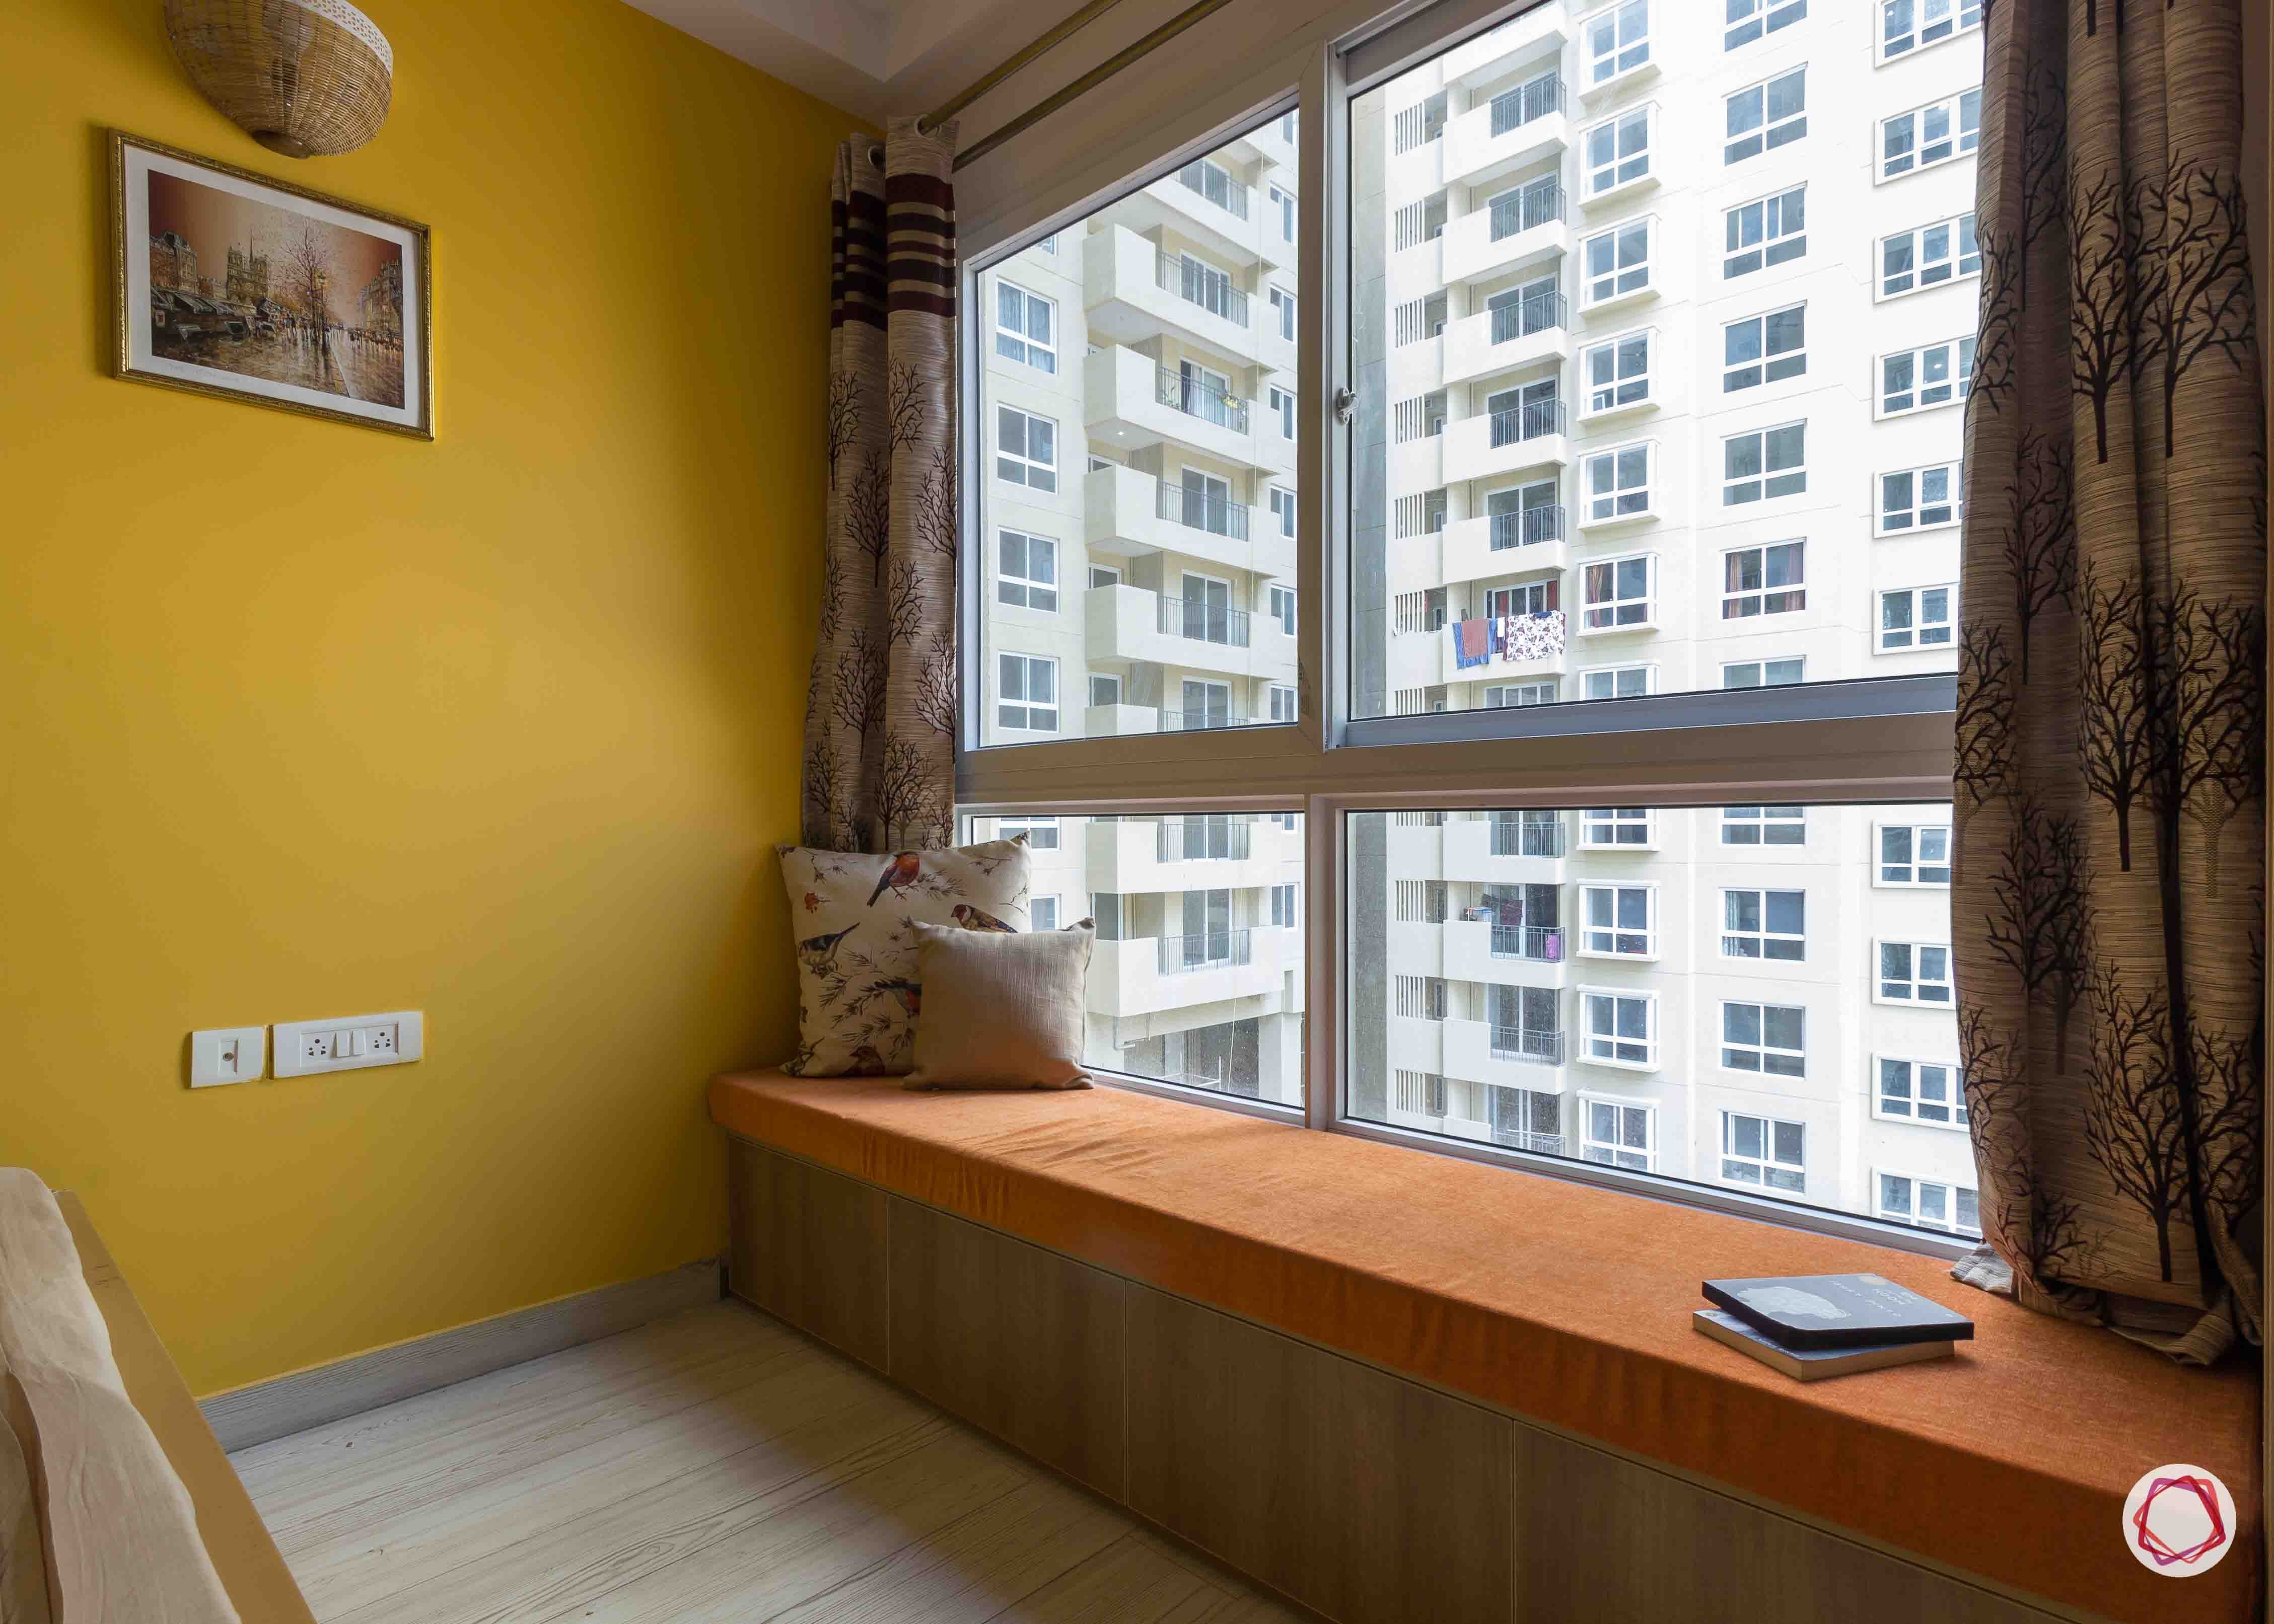 Best interior designers in bangalore_window-seat-yellow-wall